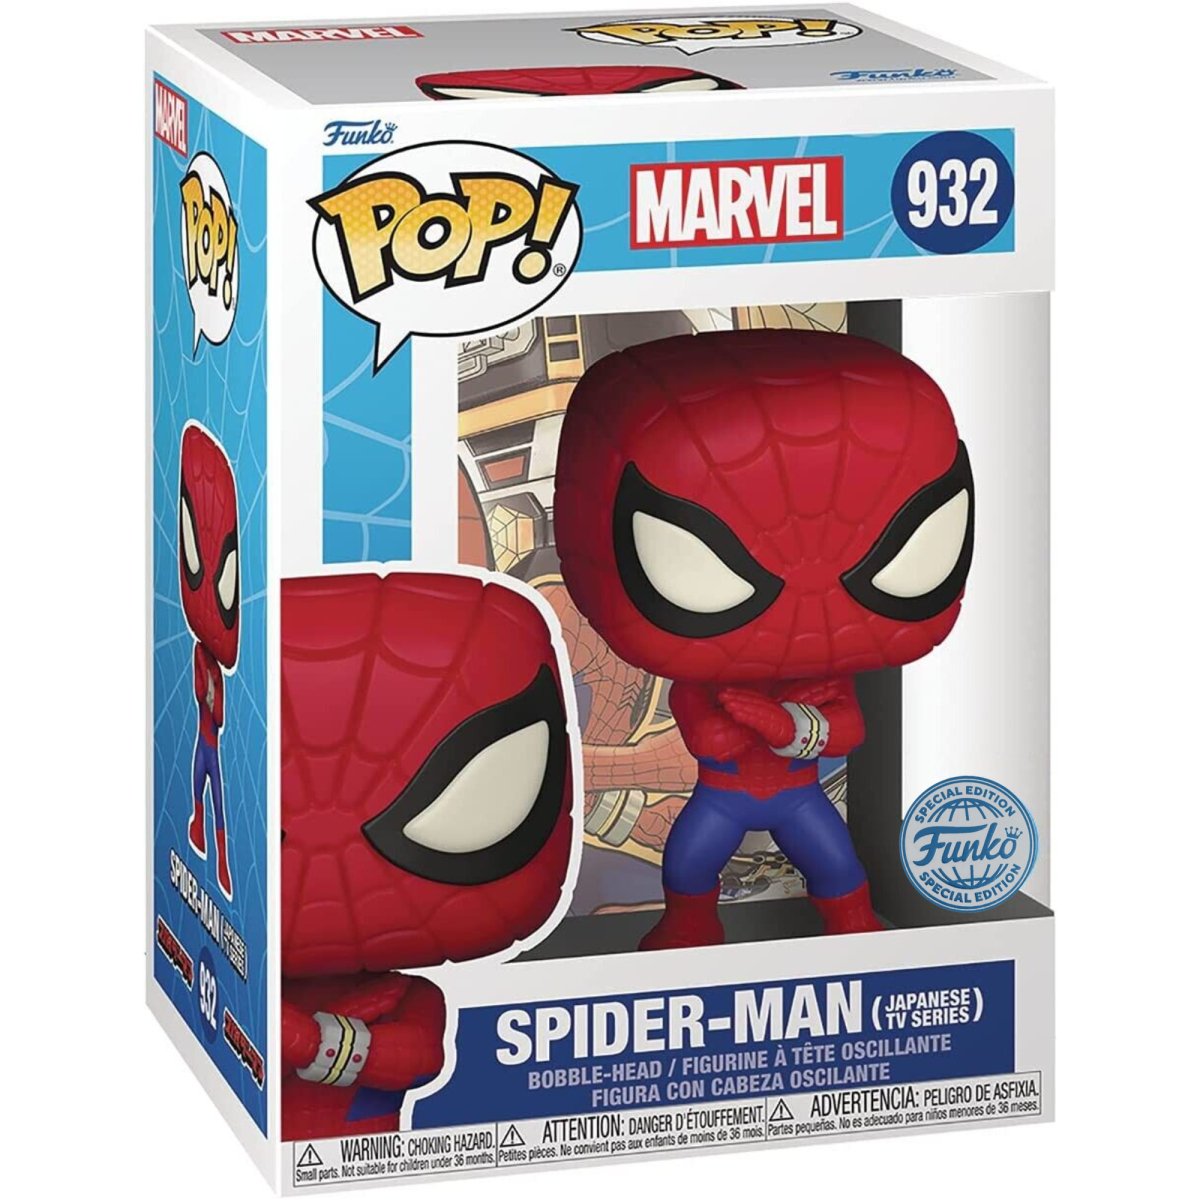 Marvel - Spider-Man (Japanese TV Series) (Special Edition) #932 - Funko Pop! Vinyl Marvel - Persona Toys